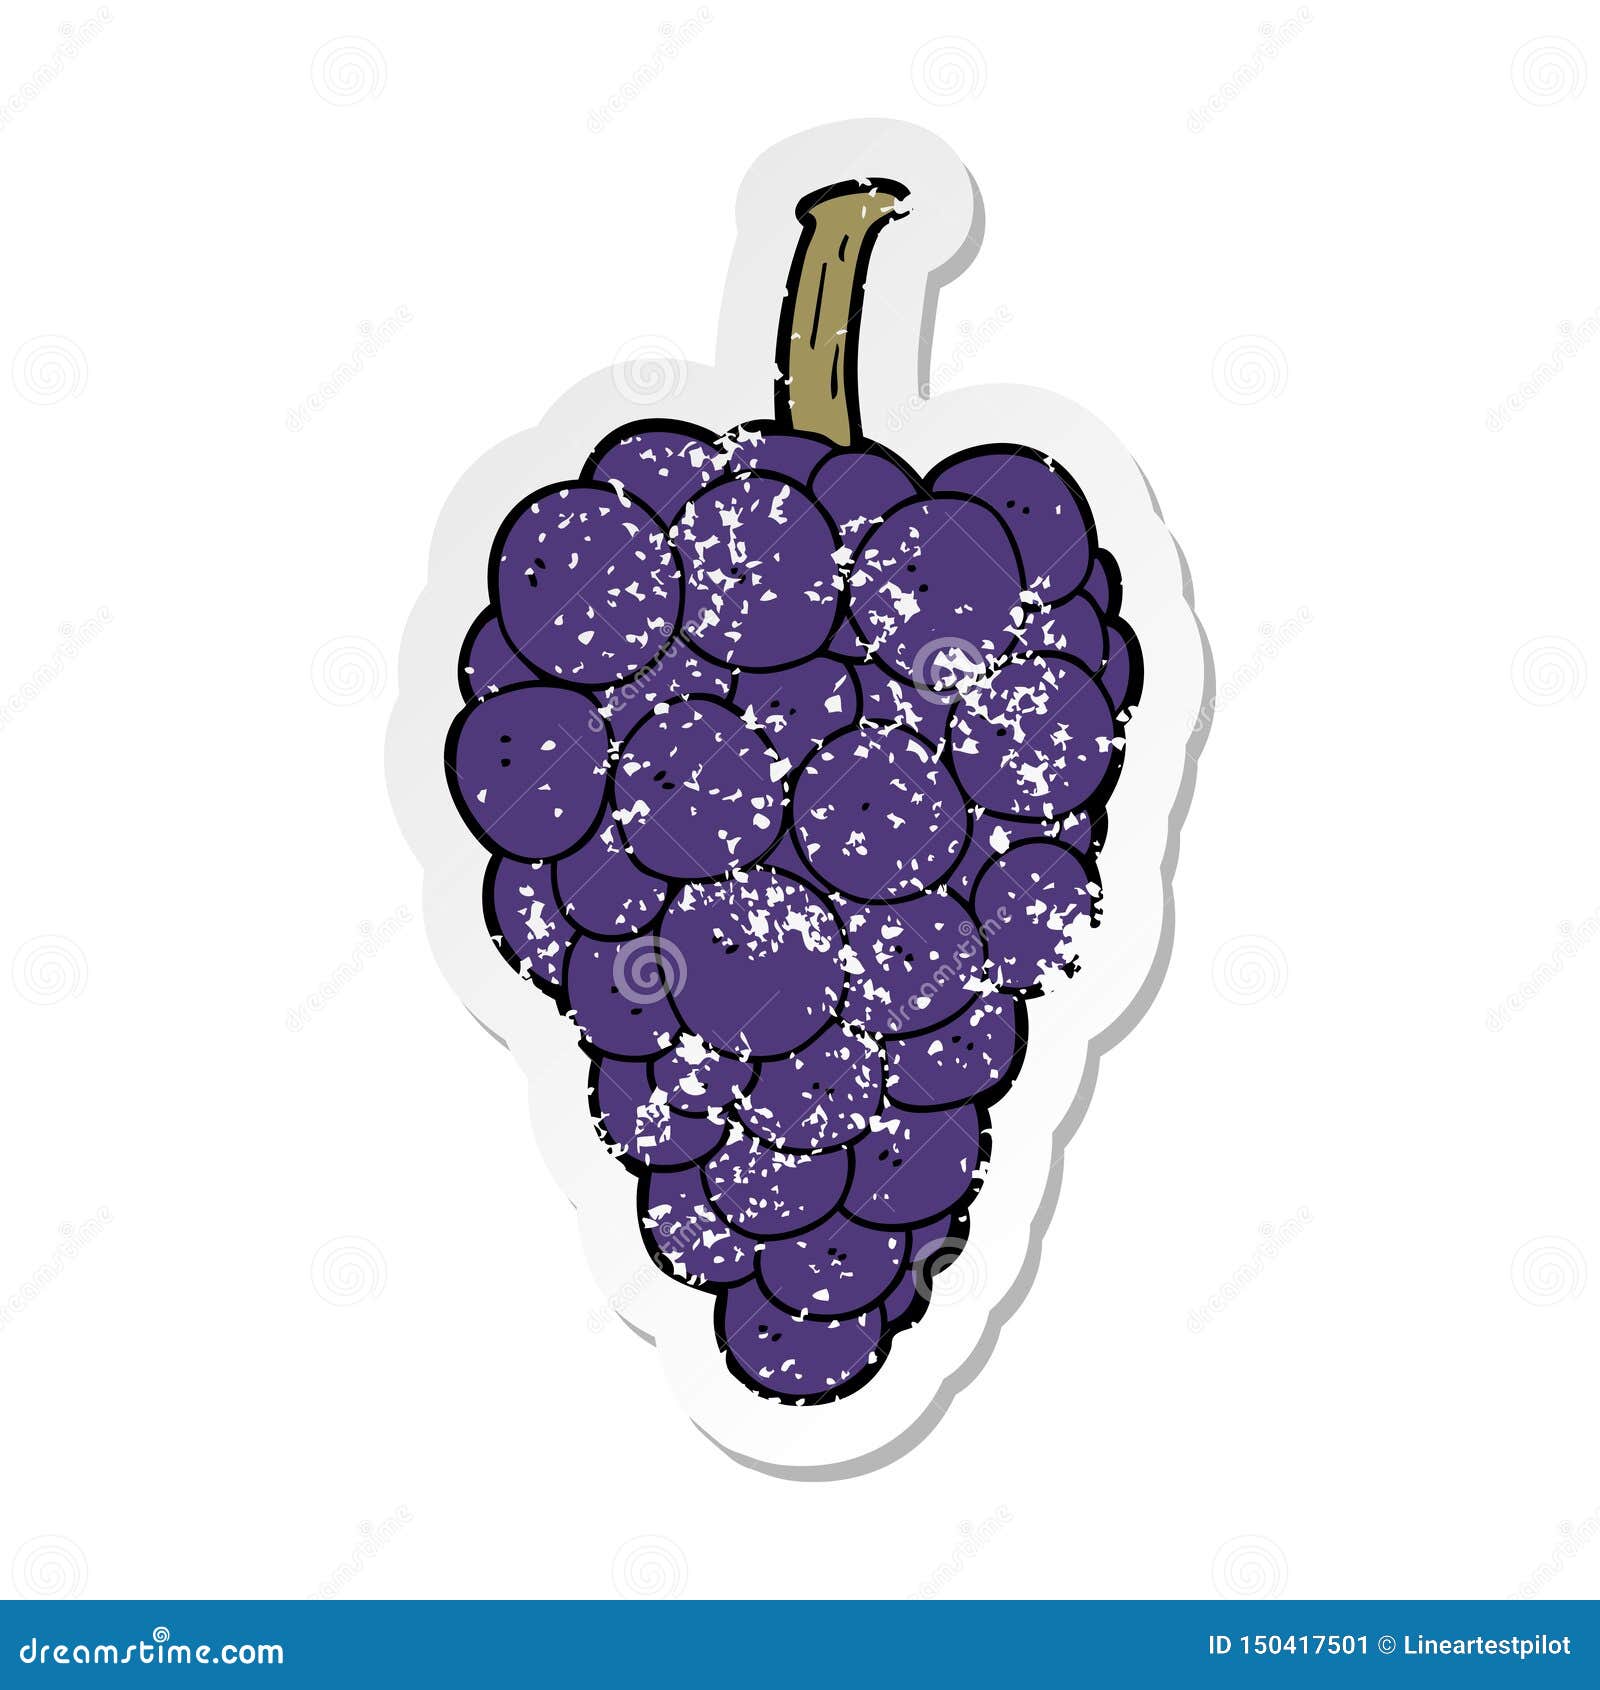 Premium Vector | Vector illustration of grape design